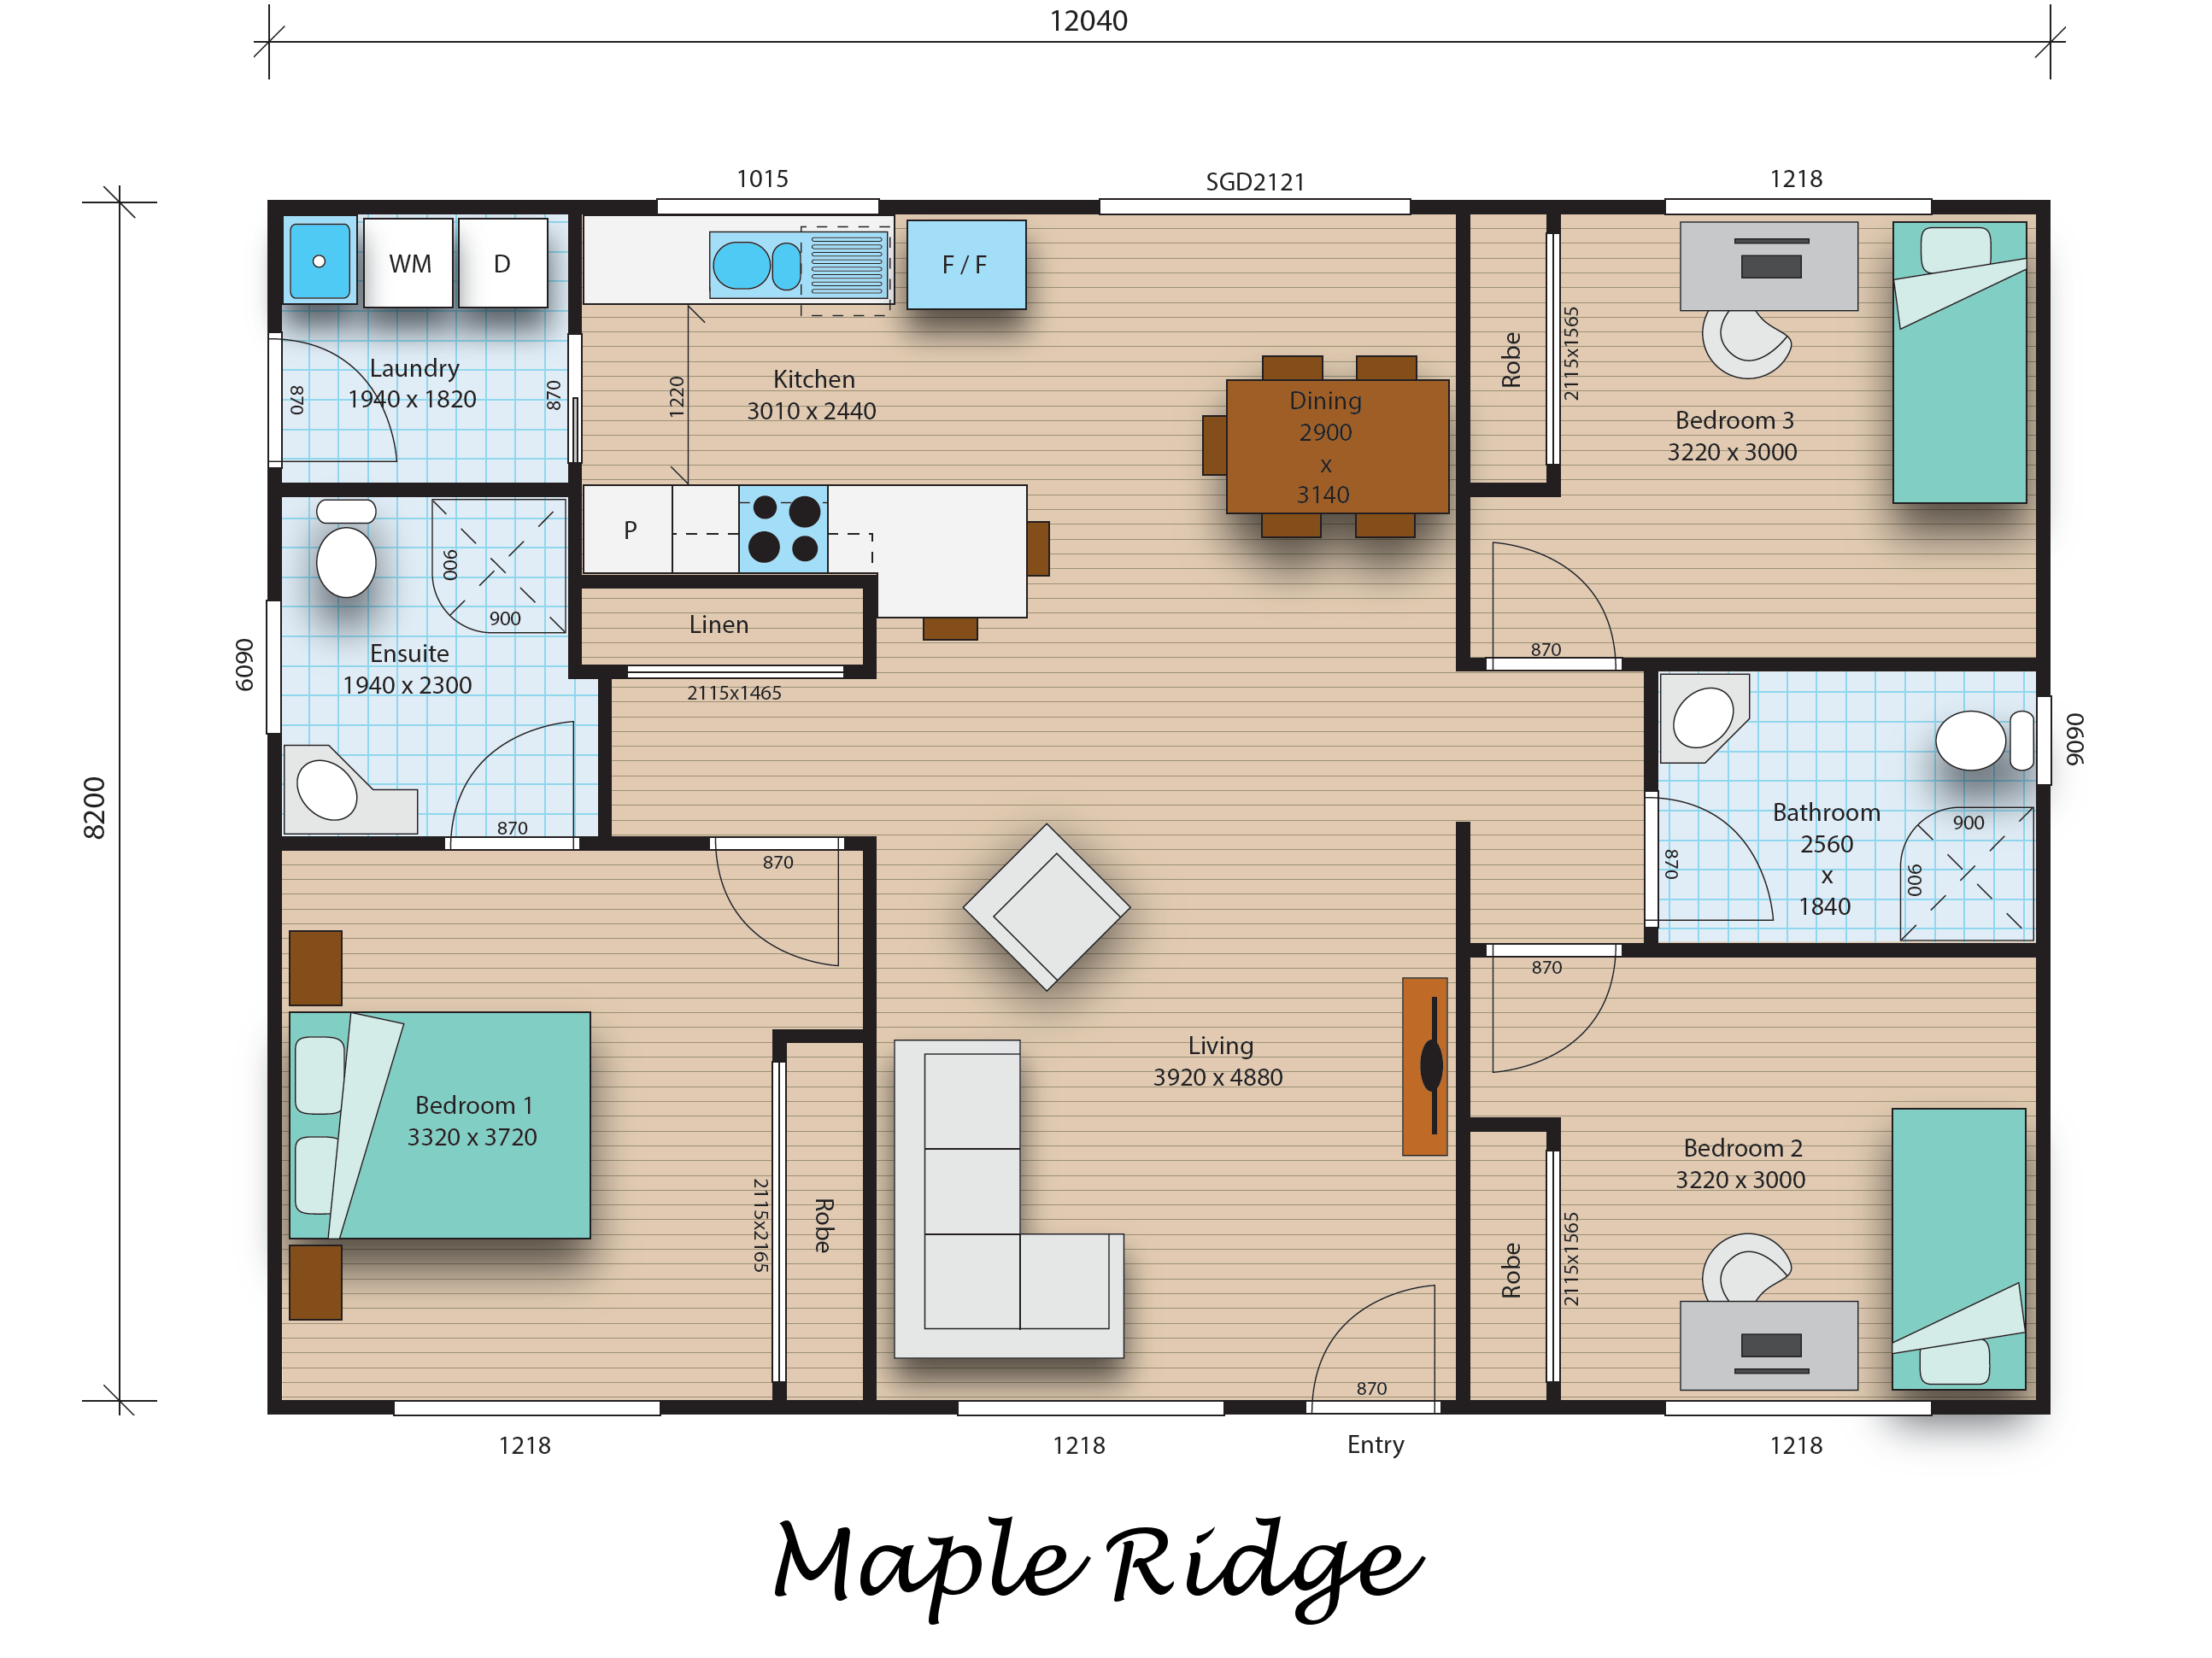 Maple Ridge floorplan image